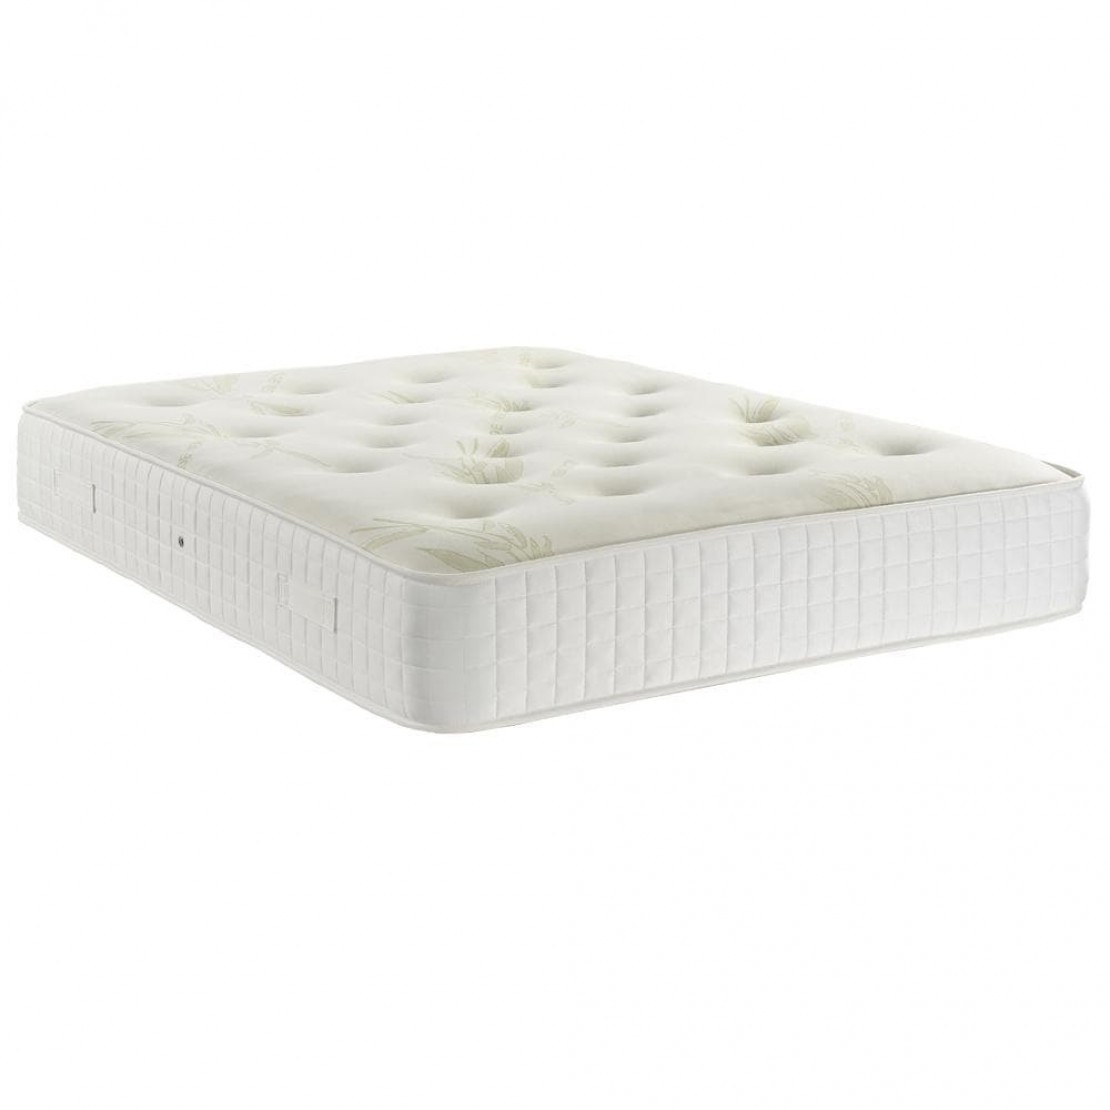 /_images/product-photos/dreamland-beds-aloe-vera-1000-mattress-a.jpg